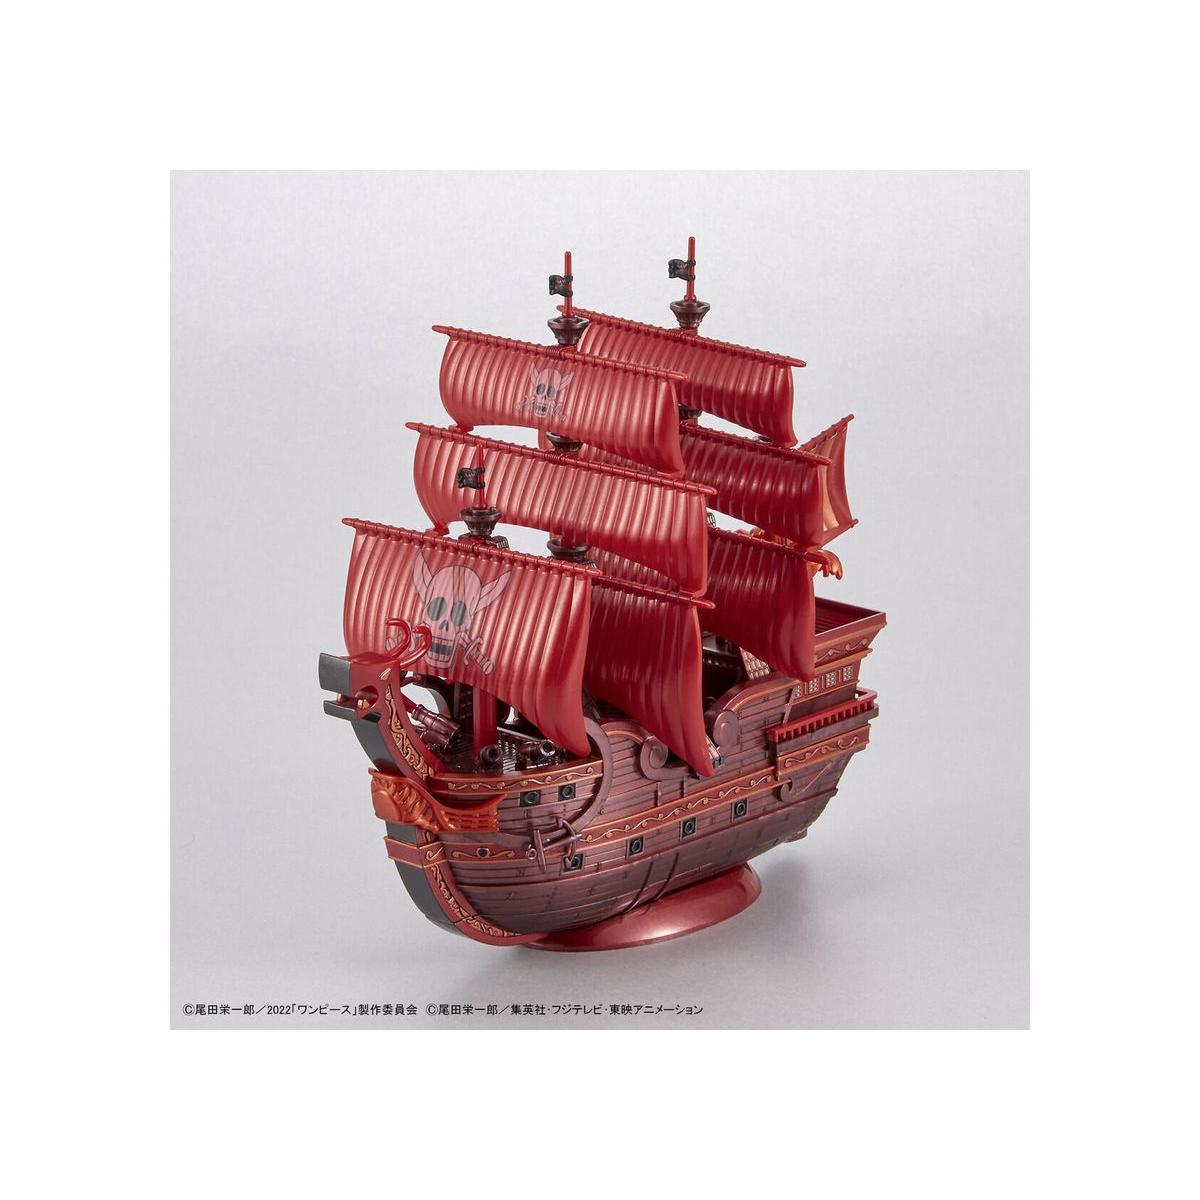 One Piece Maquette Grand Ship Collection 016 Oro Jackson